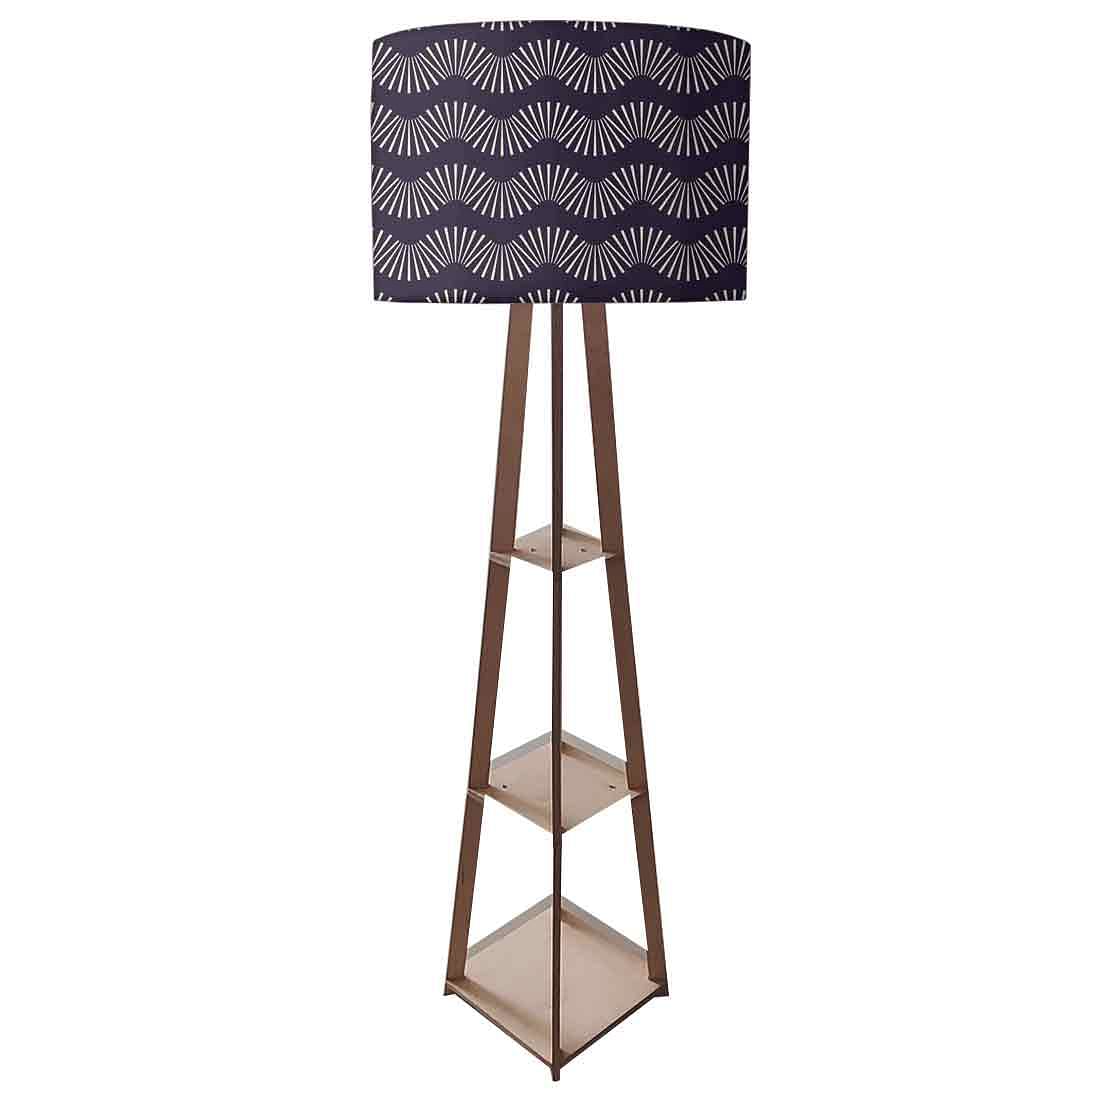 Wooden Floor Lamp with Shelf for Bedroom - Retro Pattern Nutcase